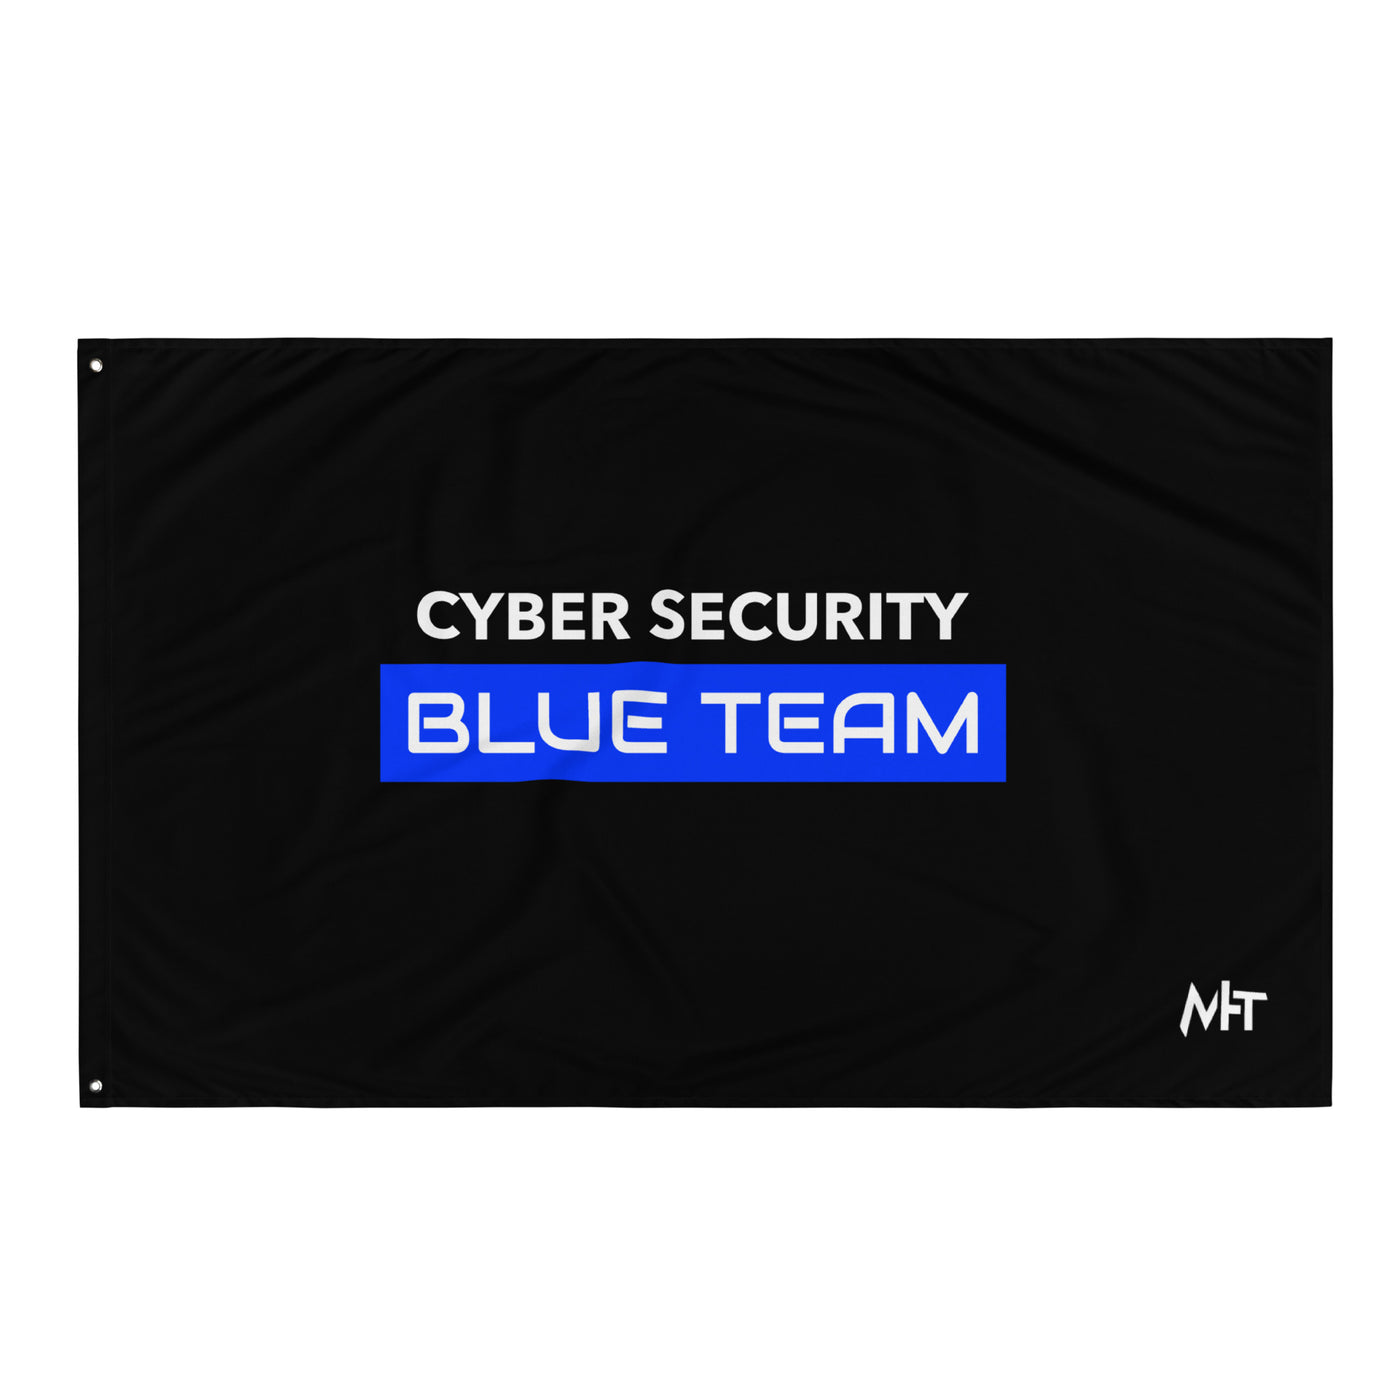 Cyber Security Blue Team V12 - Flag